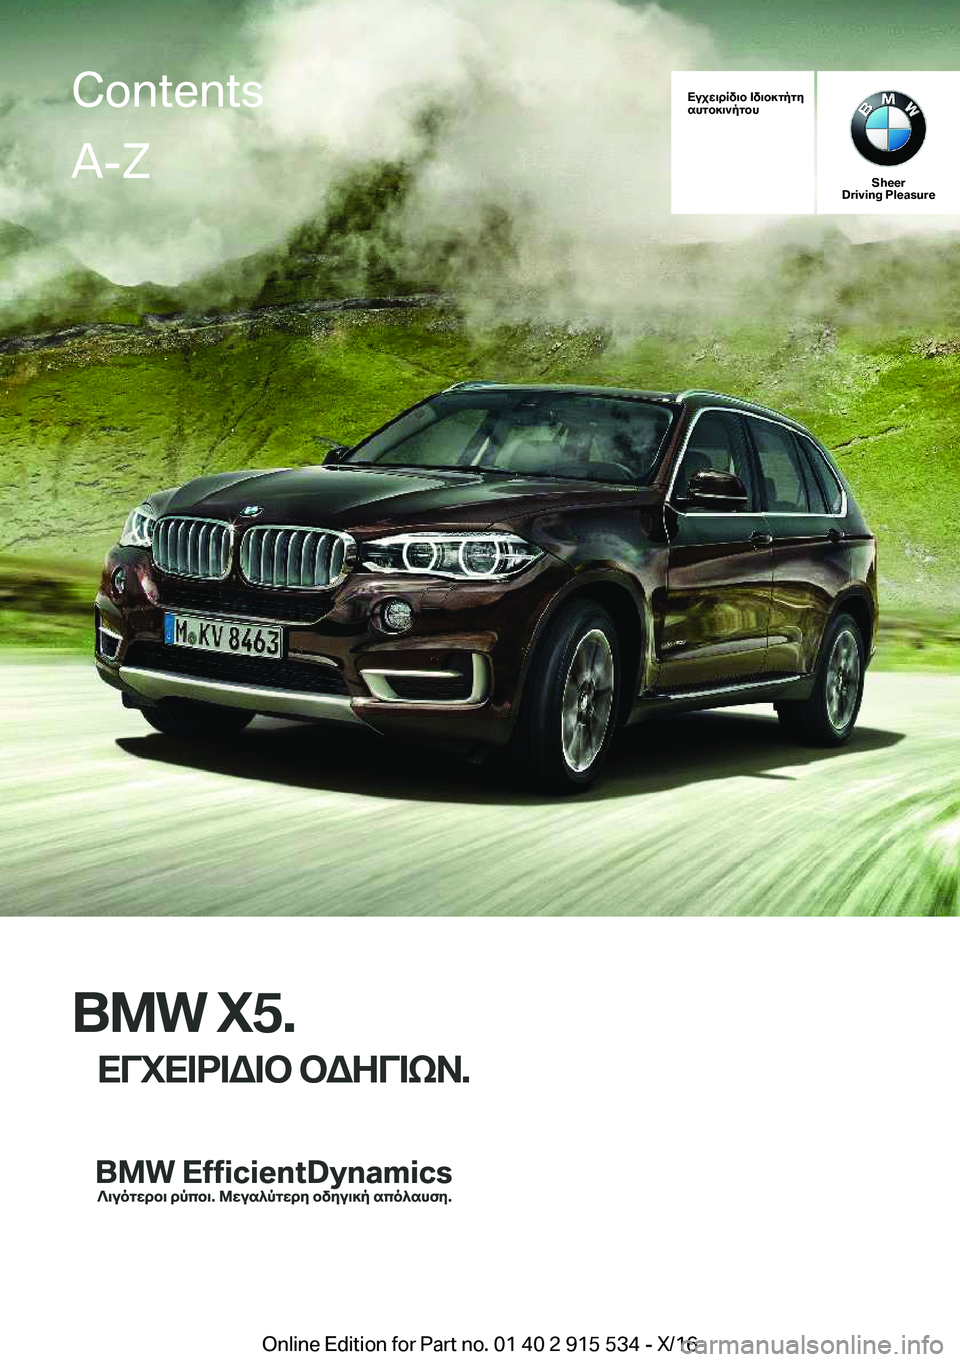 BMW X5 2017  ΟΔΗΓΌΣ ΧΡΉΣΗΣ (in Greek) Xujw\dRv\b�=v\b]gpgy
shgb]\`pgbh
�S�h�e�e�r
�D�r�i�v�i�n�g��P�l�e�a�s�u�r�e
�B�M�W��X�5�.
XViX=d=W=b�bW;V=kA�.
�C�o�n�t�e�n�t�s�A�-�Z
�O�n�l�i�n�e� �